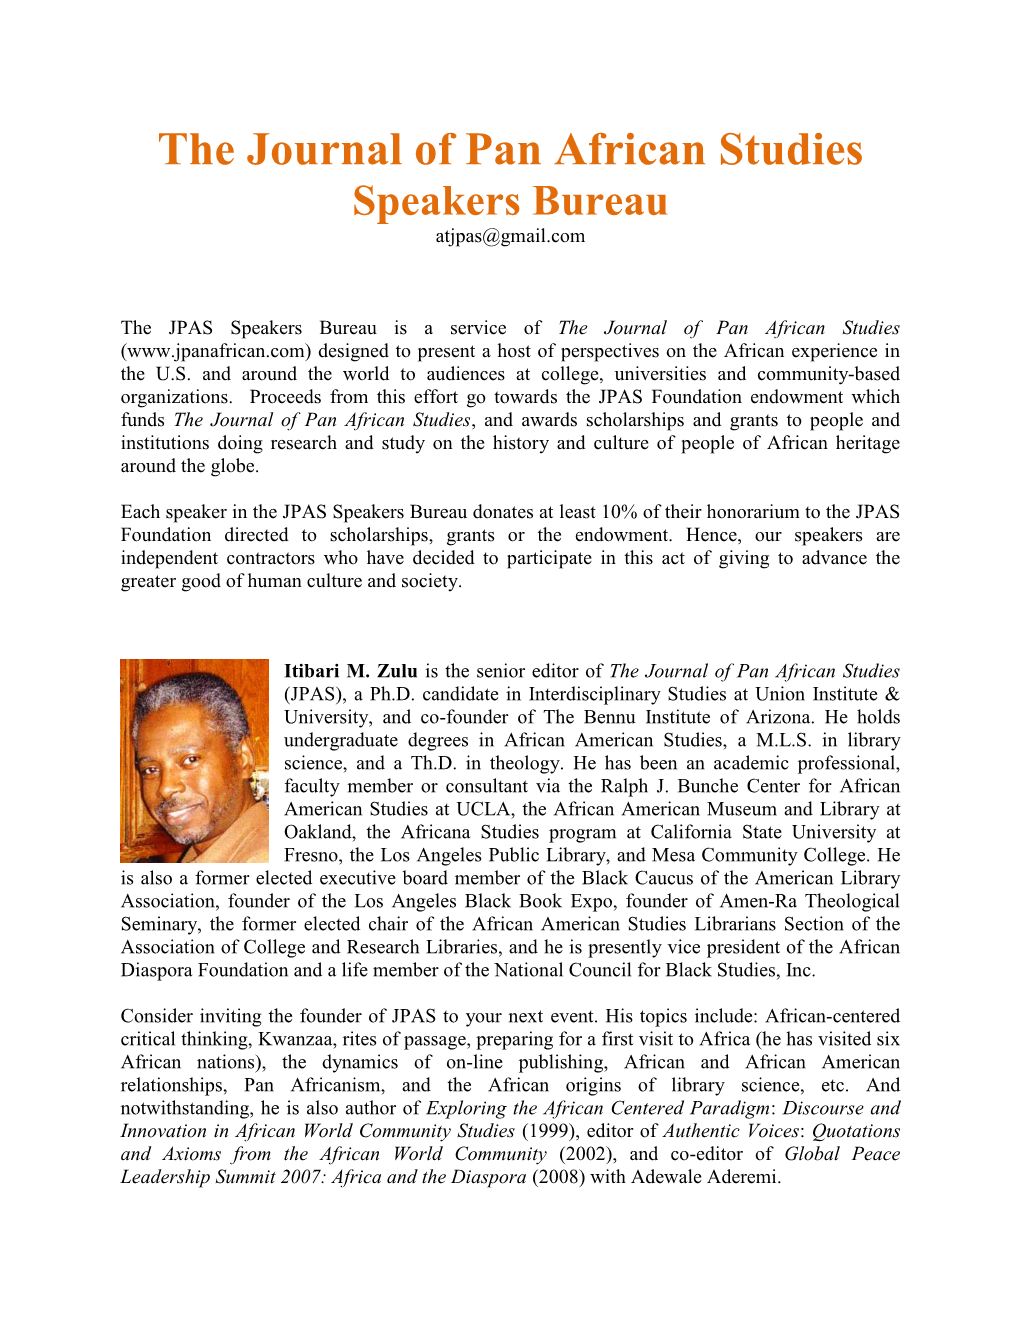 The Journal of Pan African Studies Speakers Bureau Atjpas@Gmail.Com